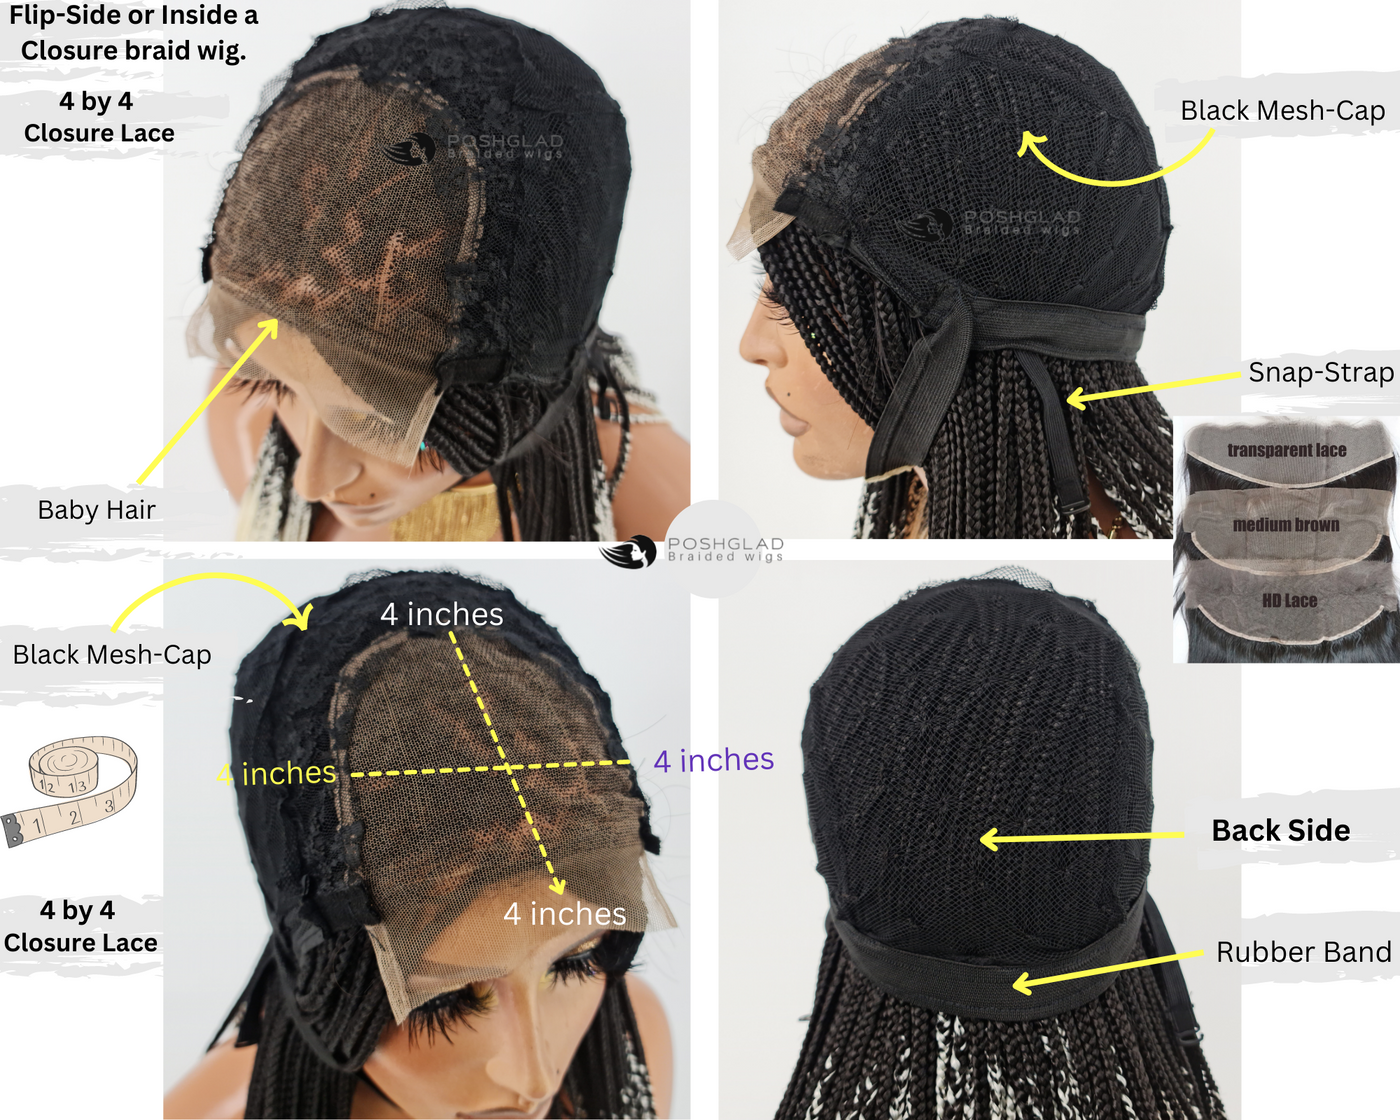 Cornrow Braid Wig "4 by 4 Closure" Mid back Length (Dorra) Poshglad Braided Wigs Cornrow Braid Wig